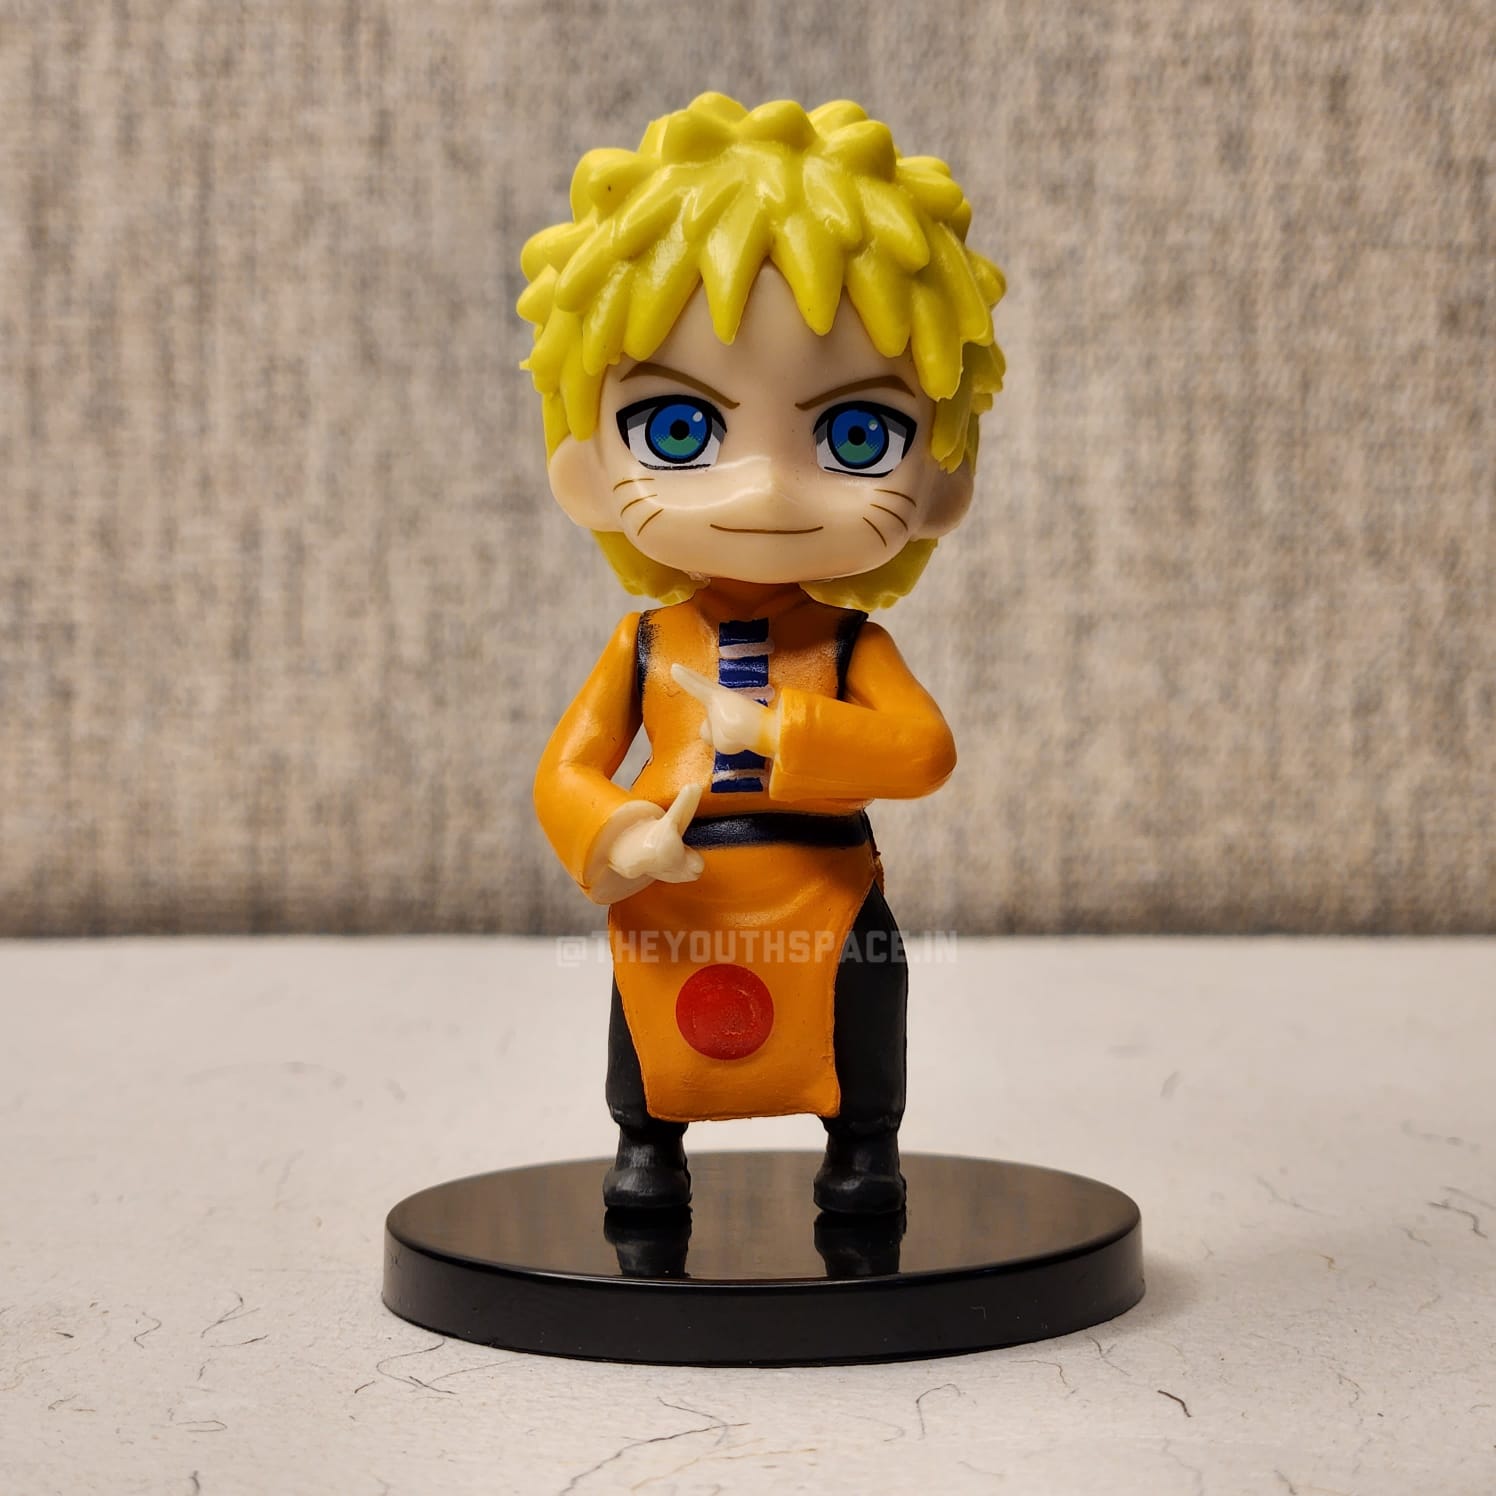 Naruto set of 6 figurines